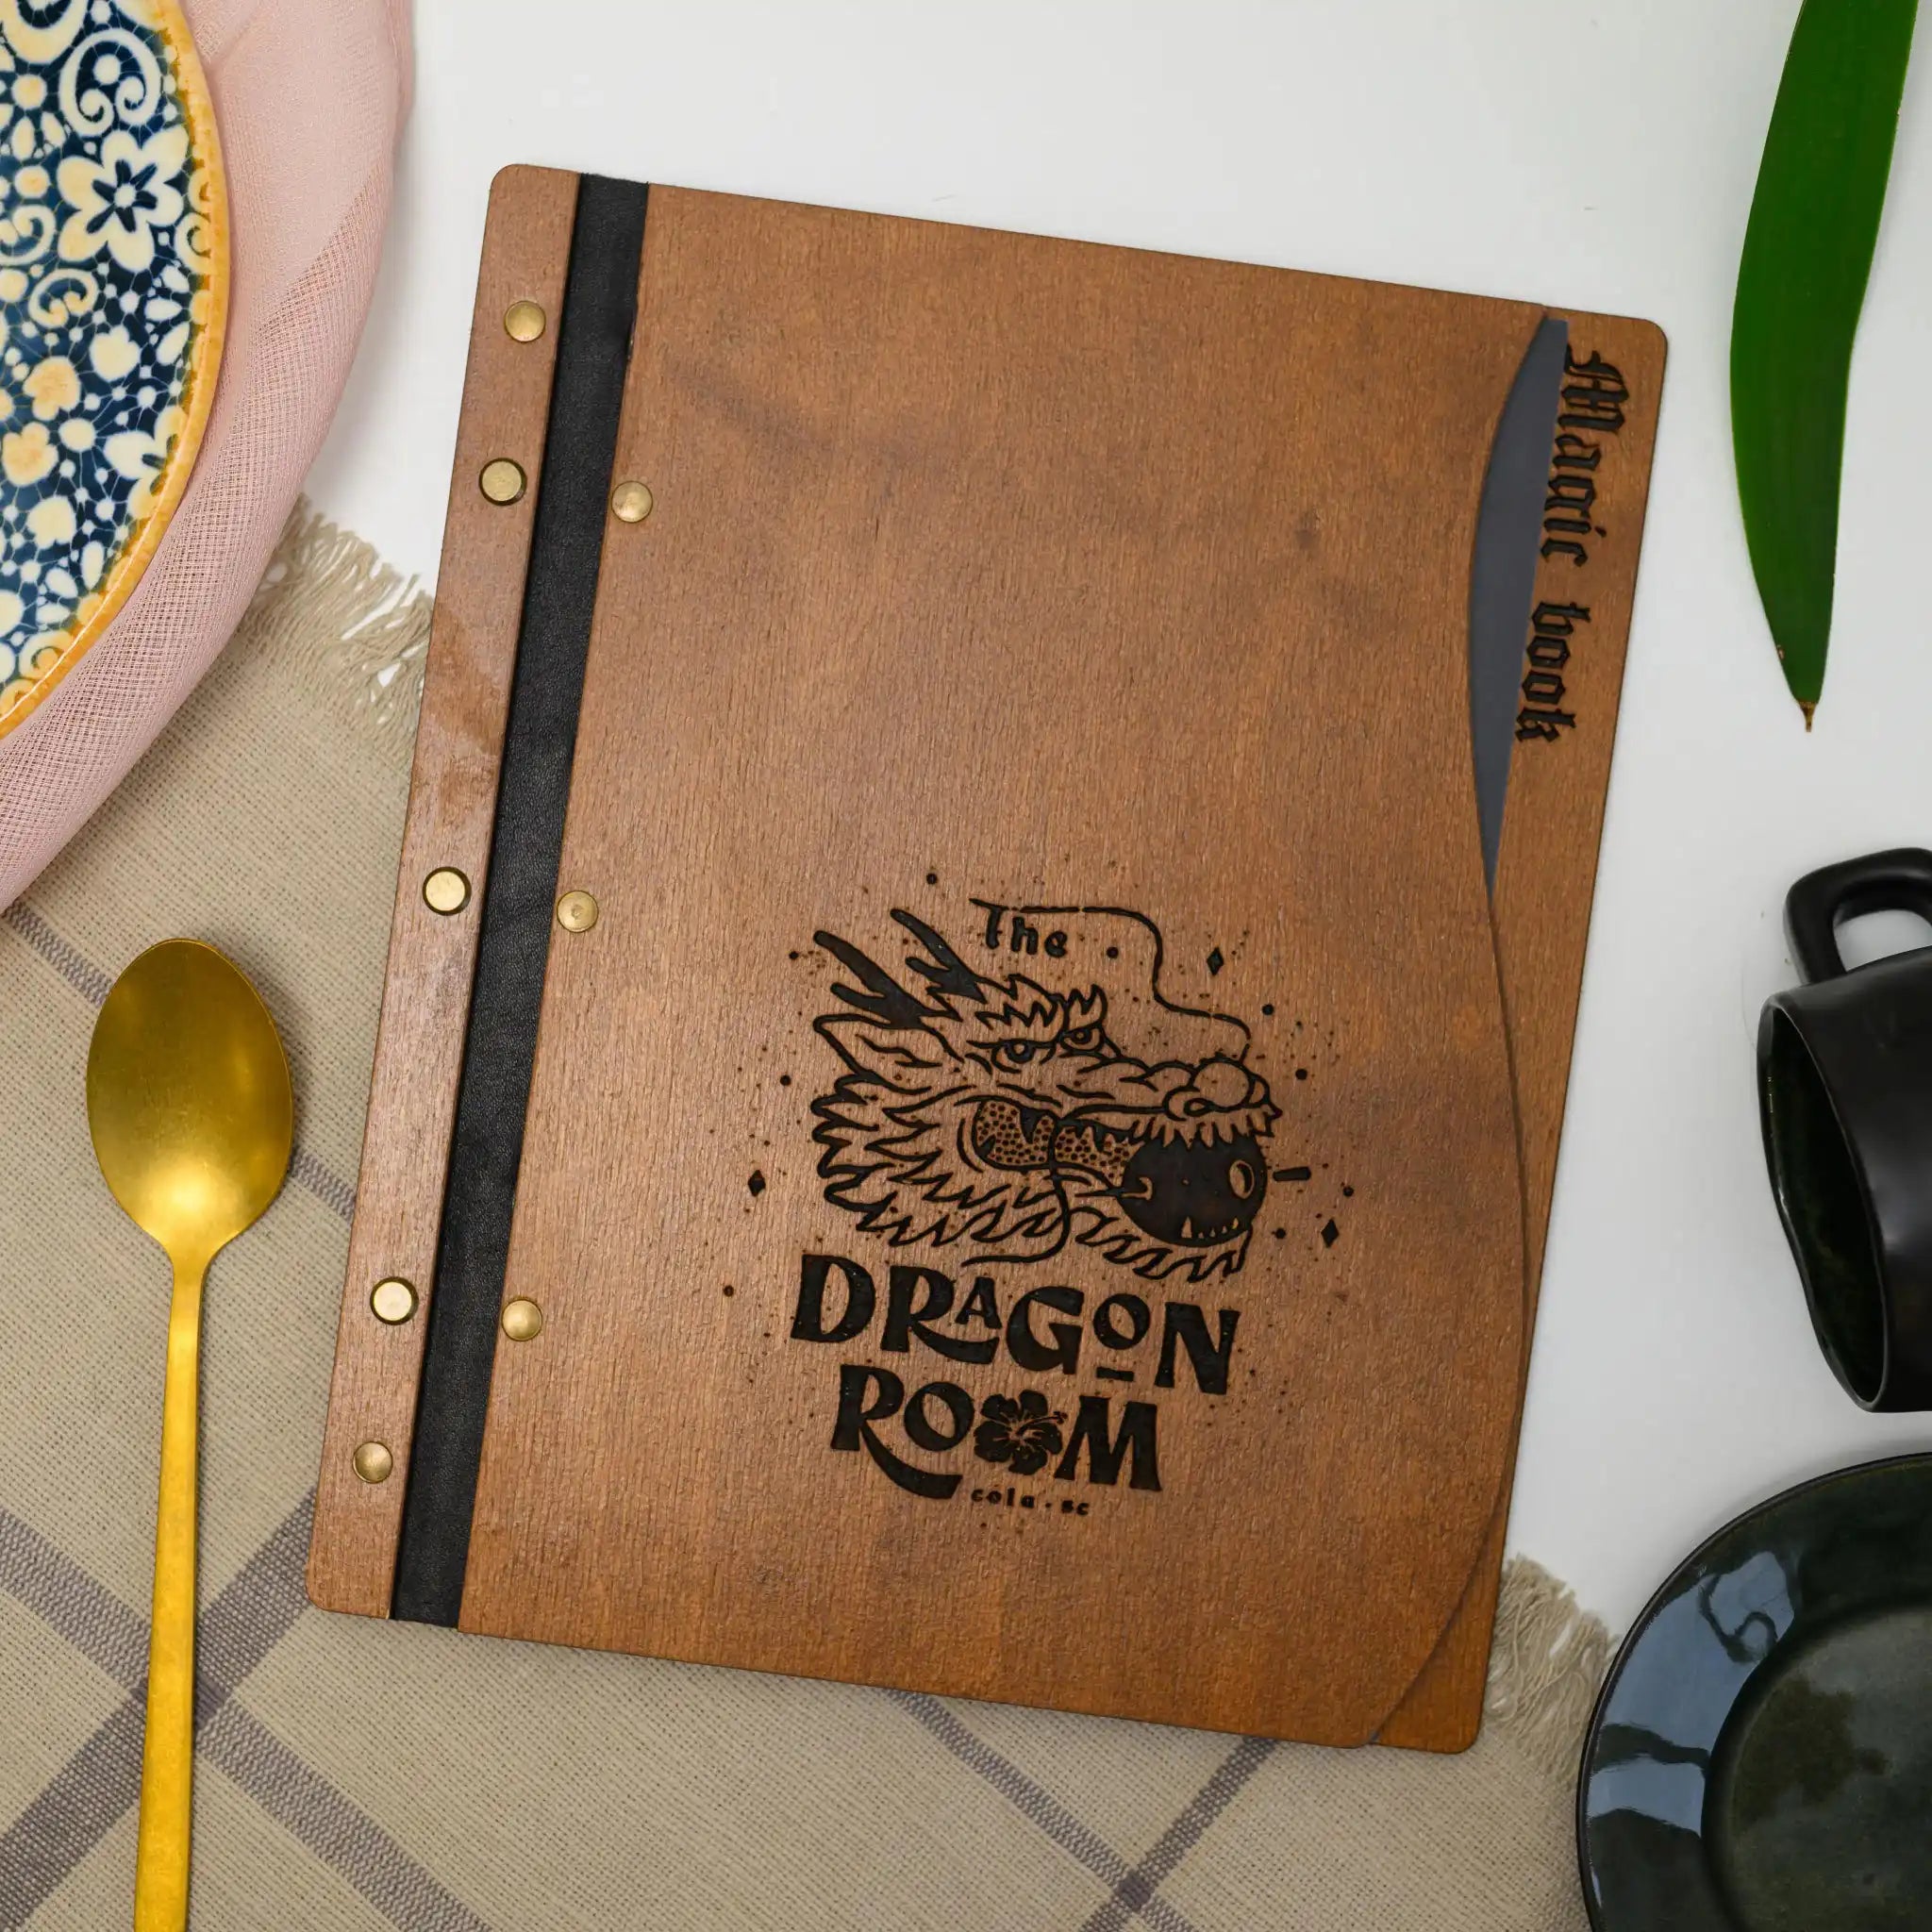 Artisanal Wooden Menu Folder: Adds rustic charm to your menu presentation.